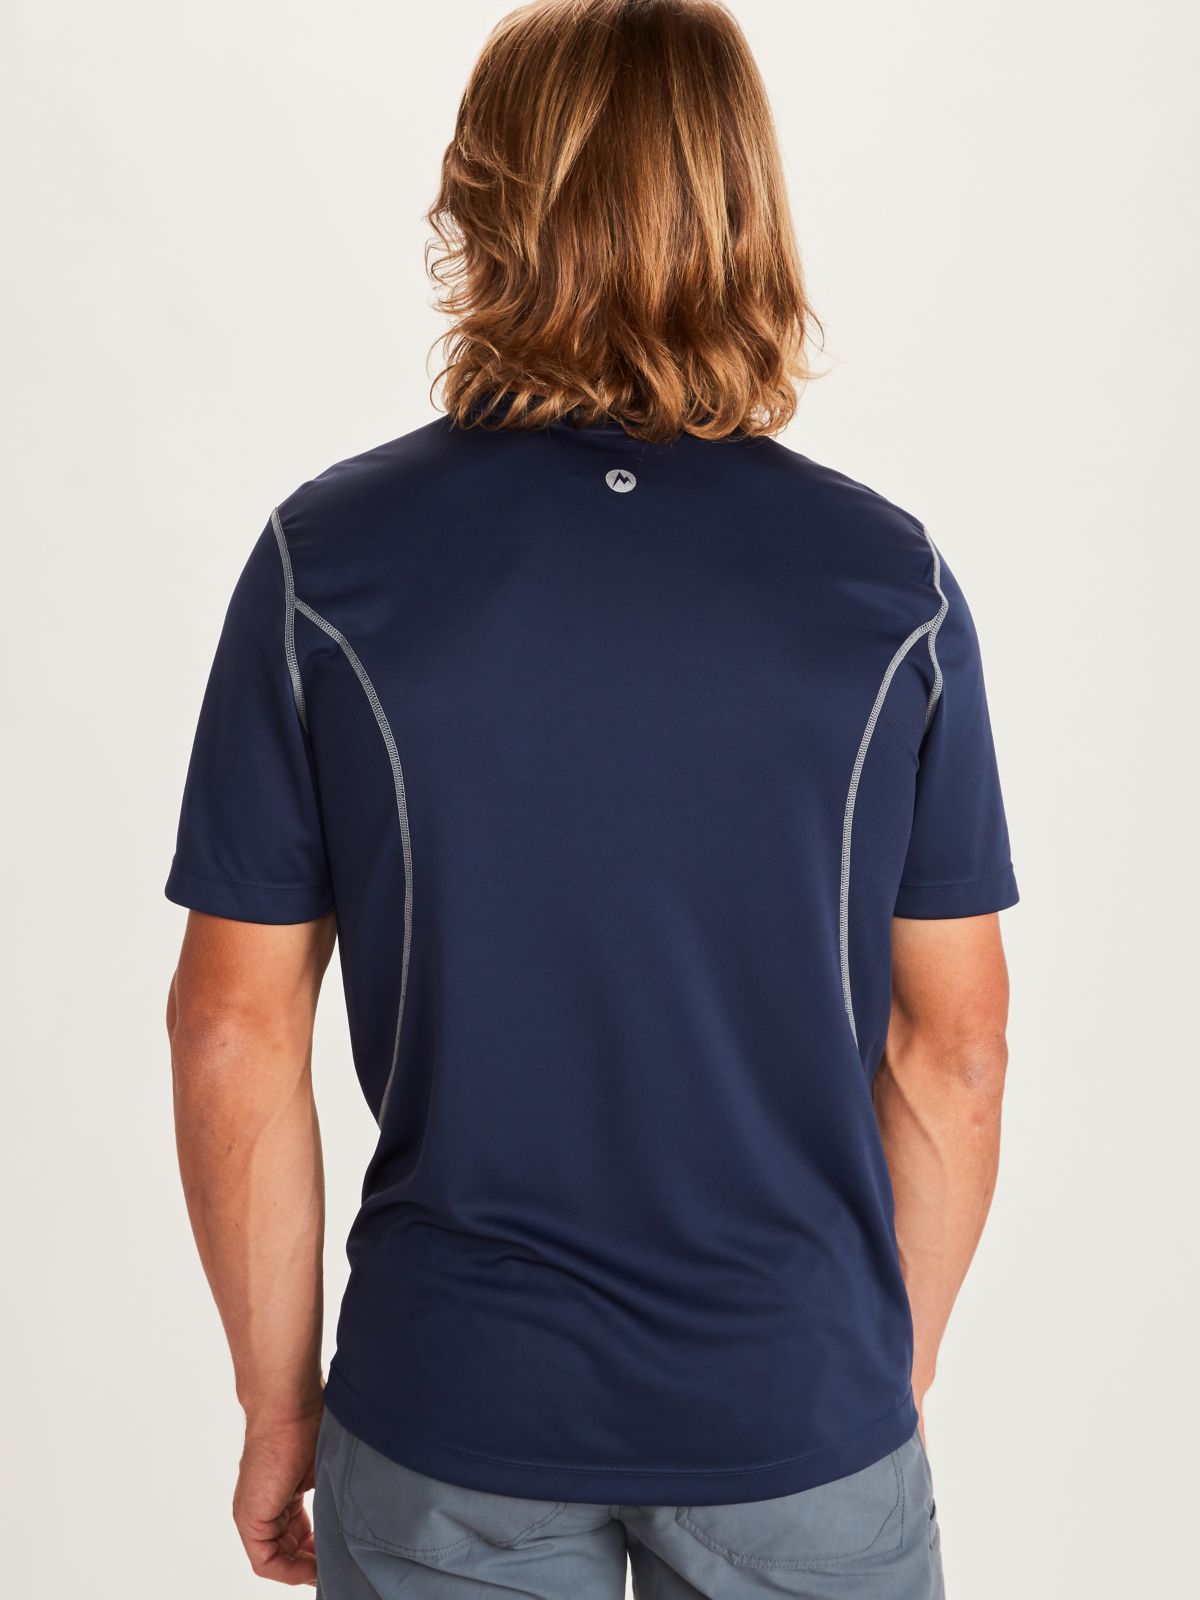 Men's Windridge with Graphic Short-Sleeve Shirt